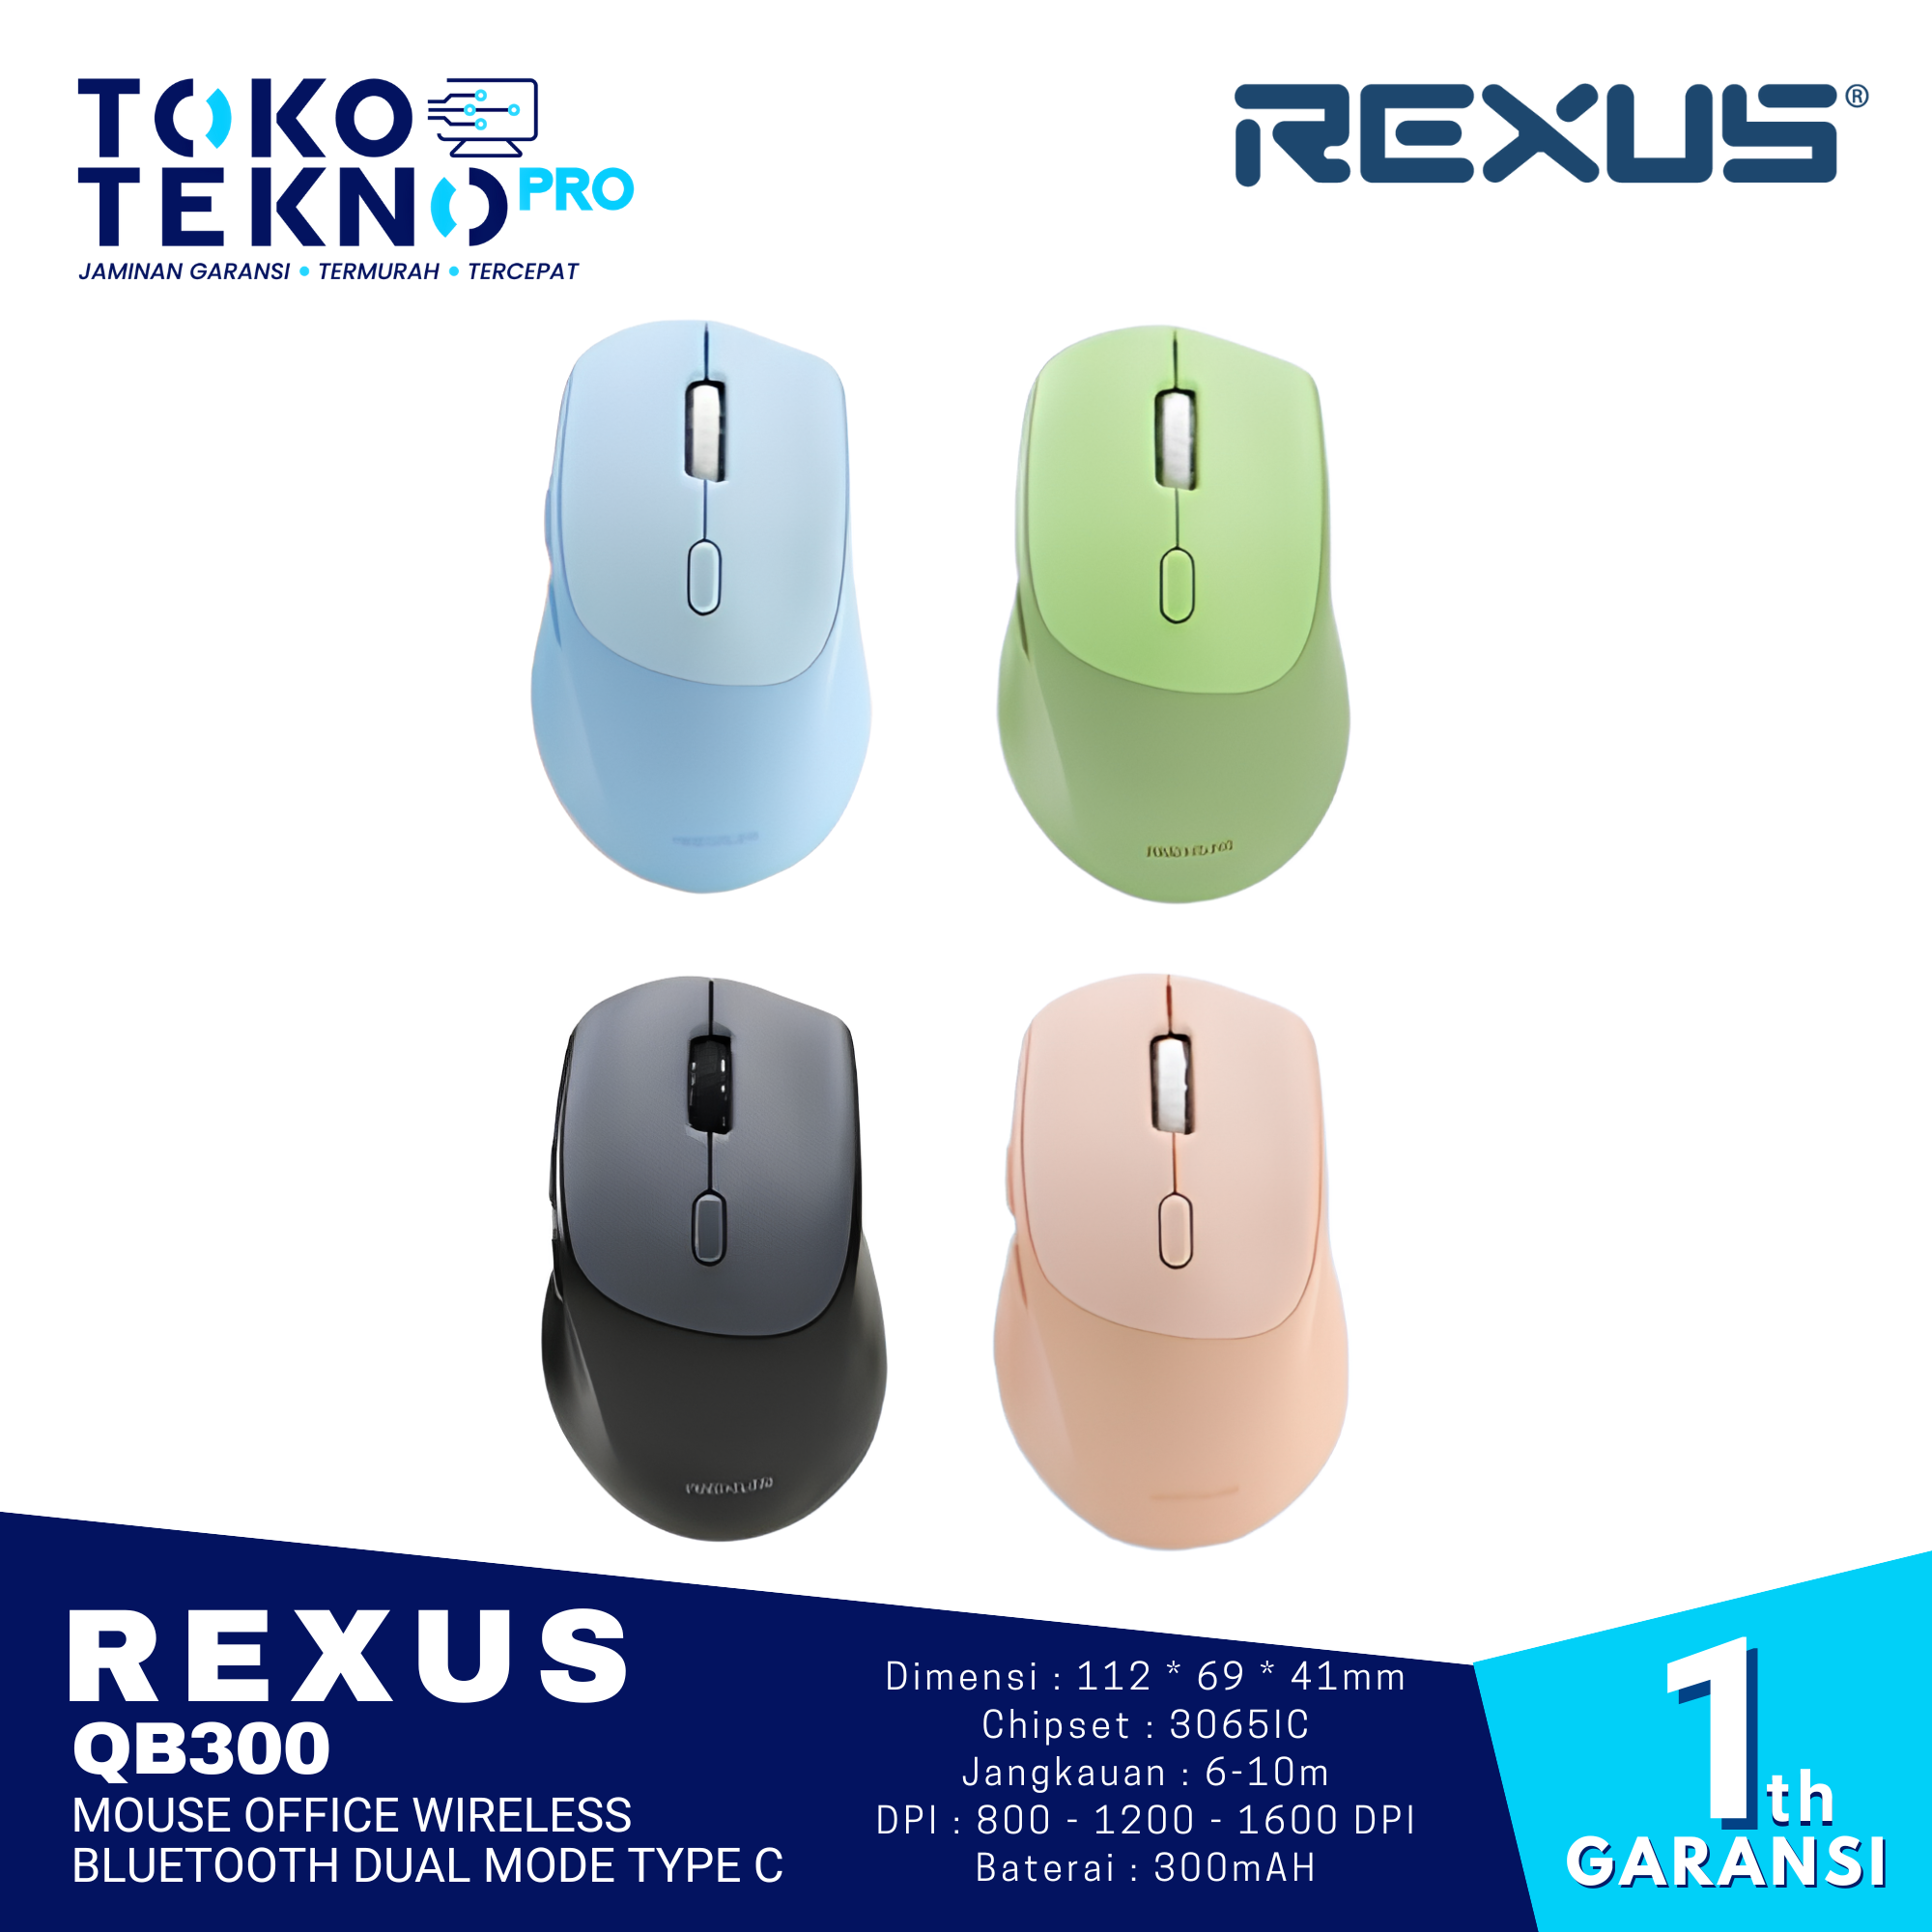 Rexus QB300